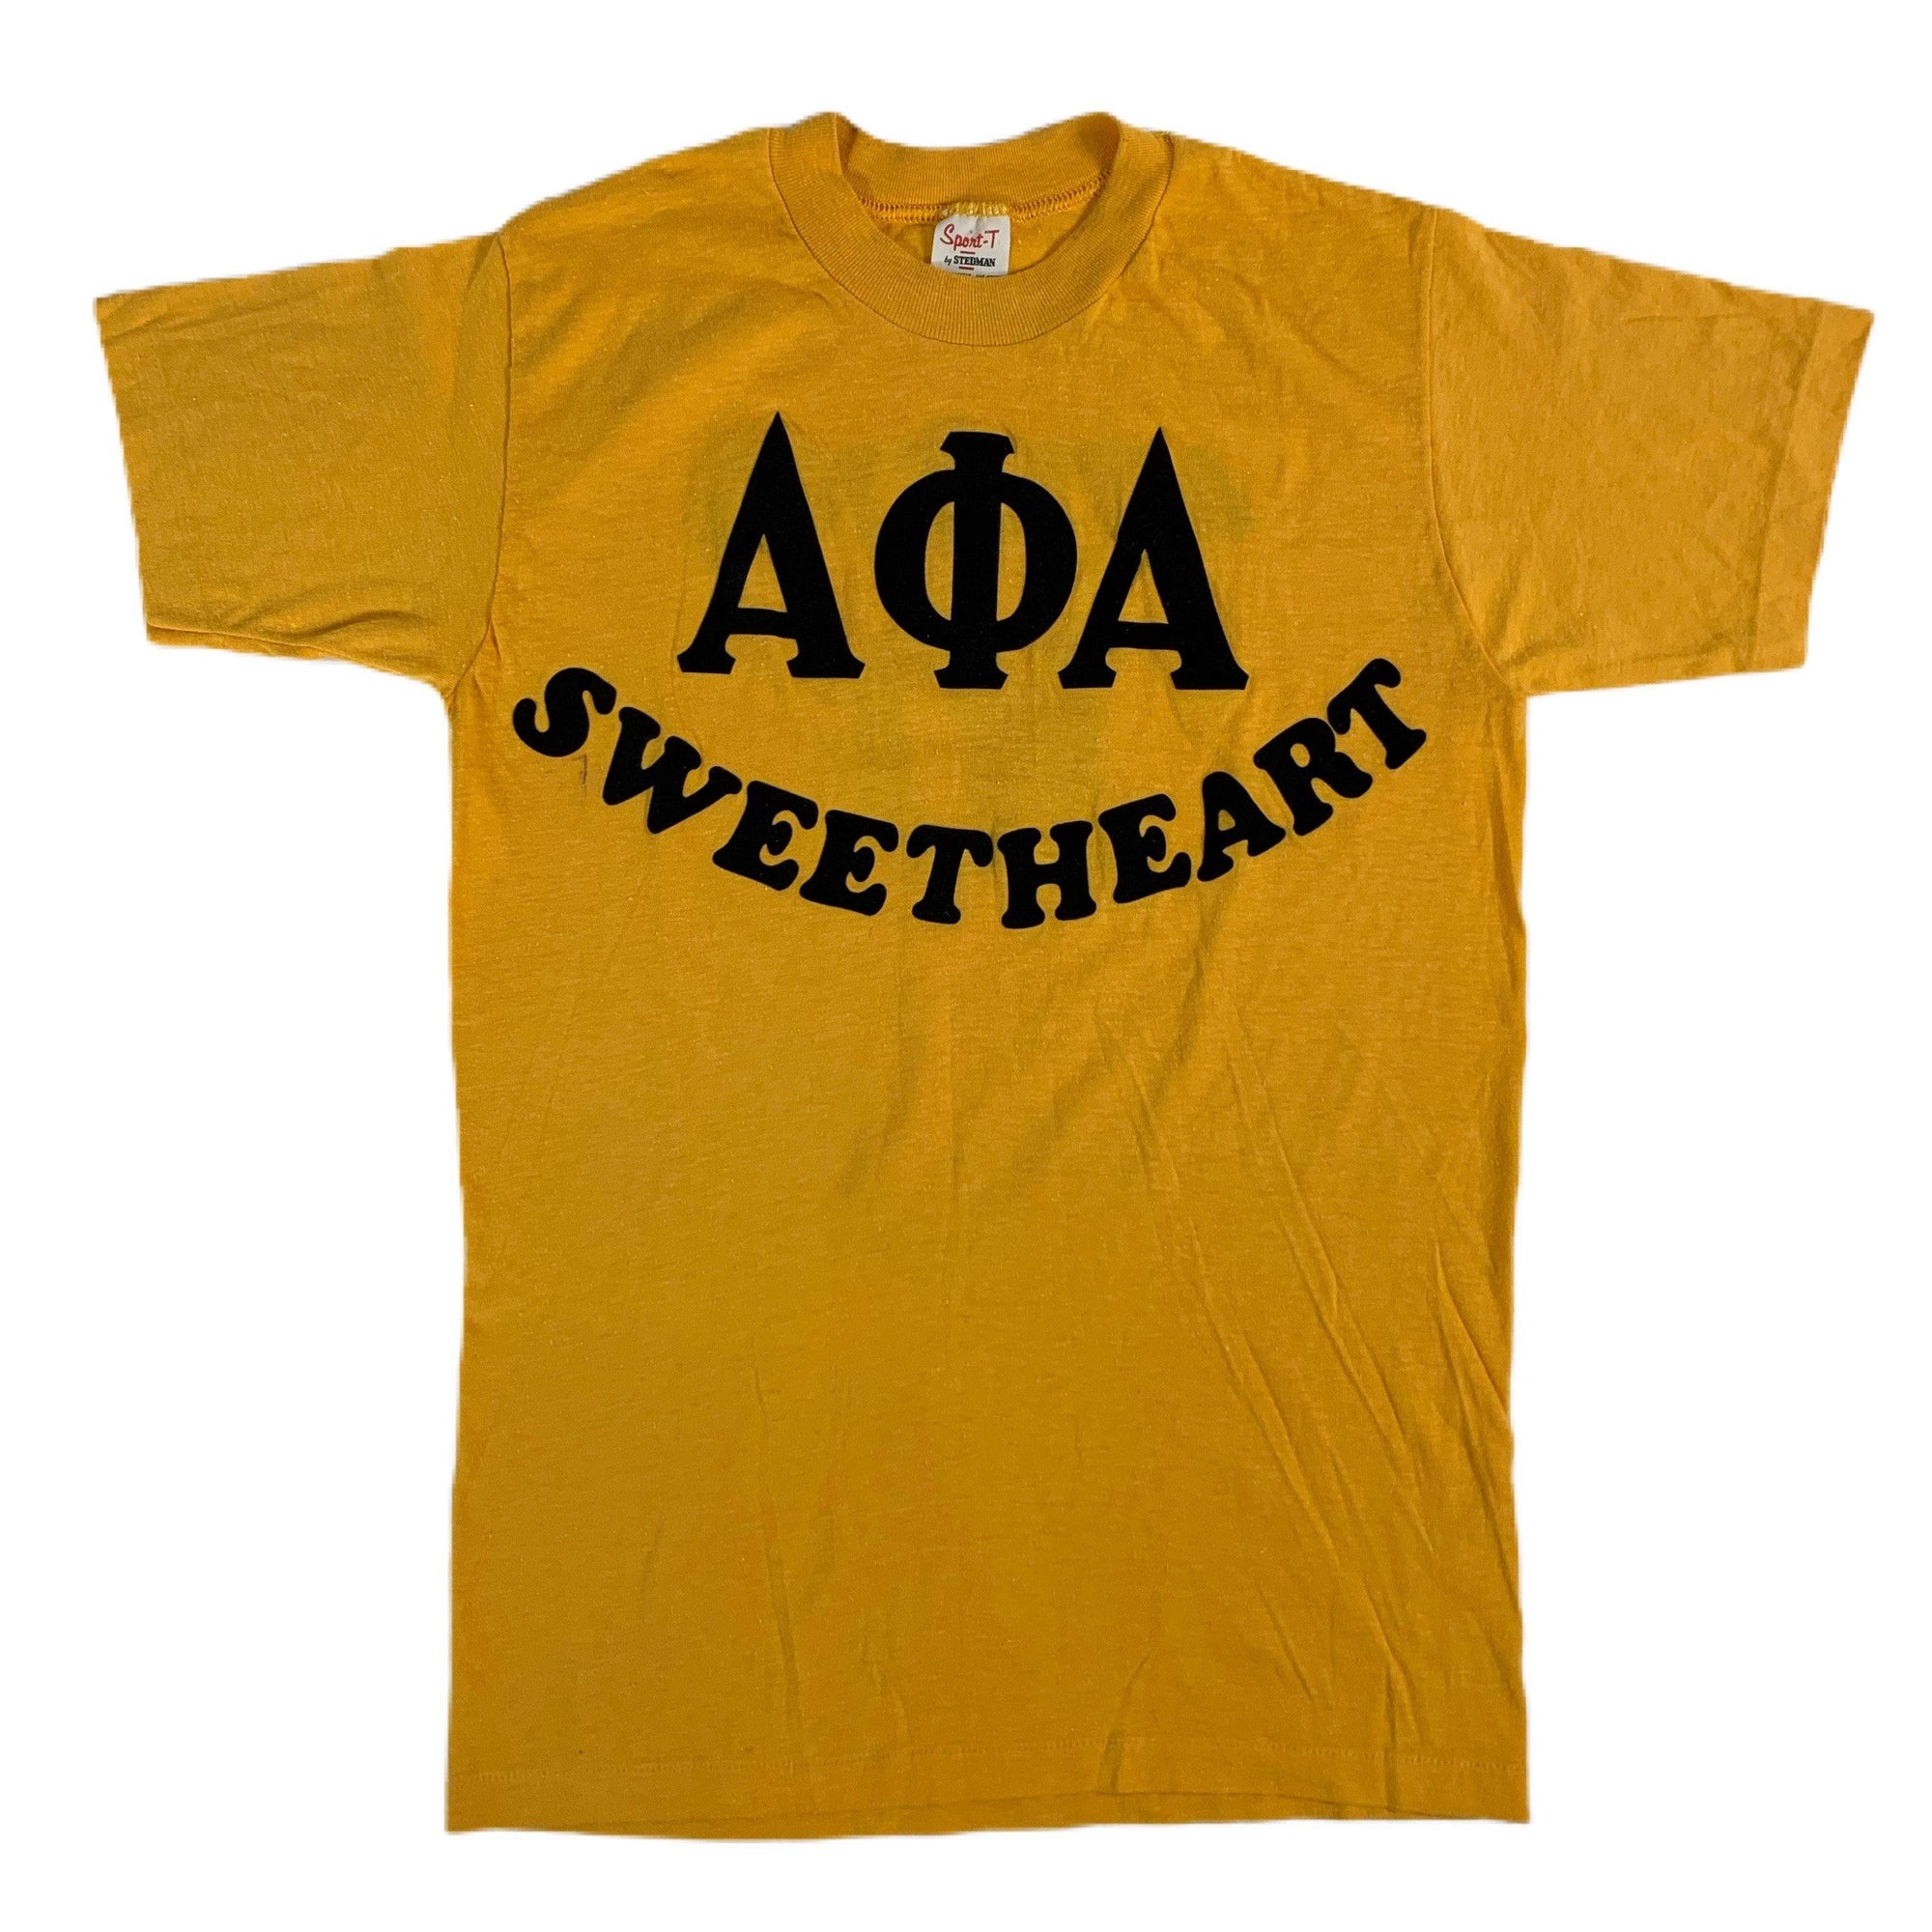 Vintage Fraternity "Sweetheart" T-Shirt - jointcustodydc